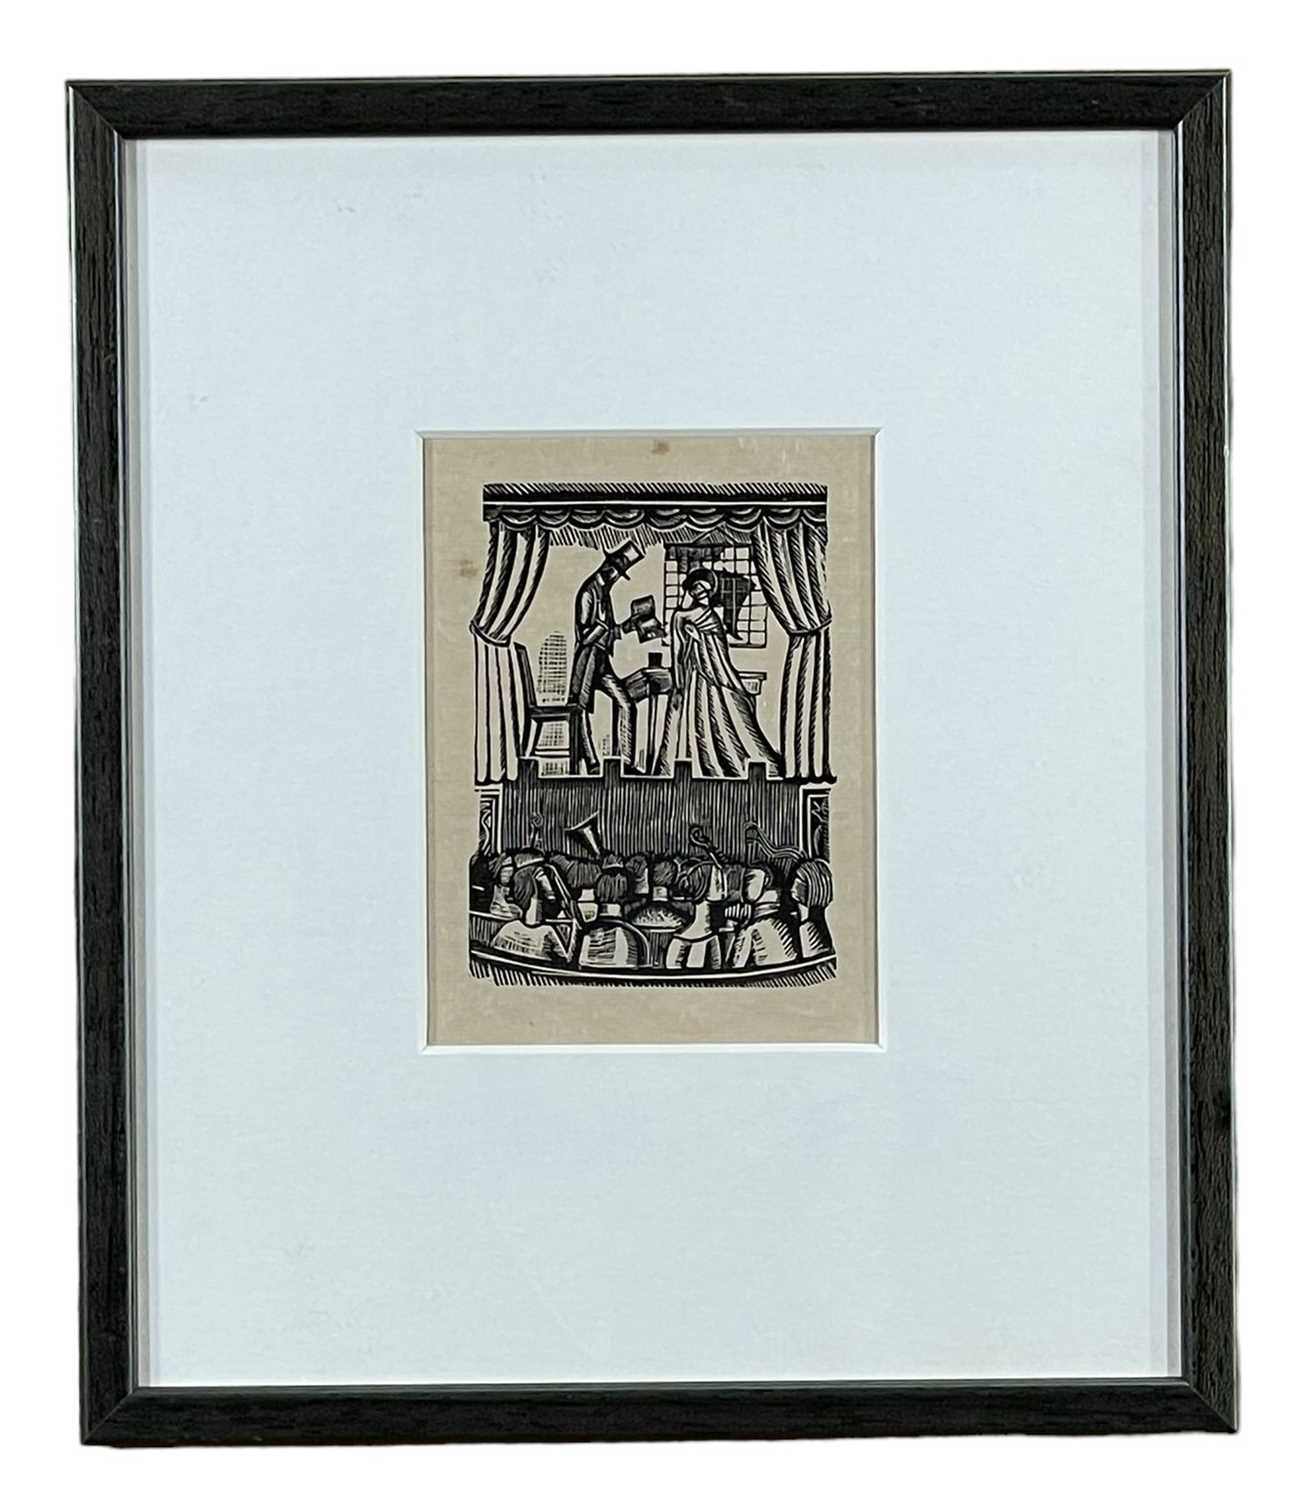 Artwork by David Jones, ‡ DAVID JONES 1924 wood engraving (1981 reprint limited to 75 from original woodblock) - entitled verso 'Abraham Lincoln (Libellus Lapidum)', Made of wood engraving